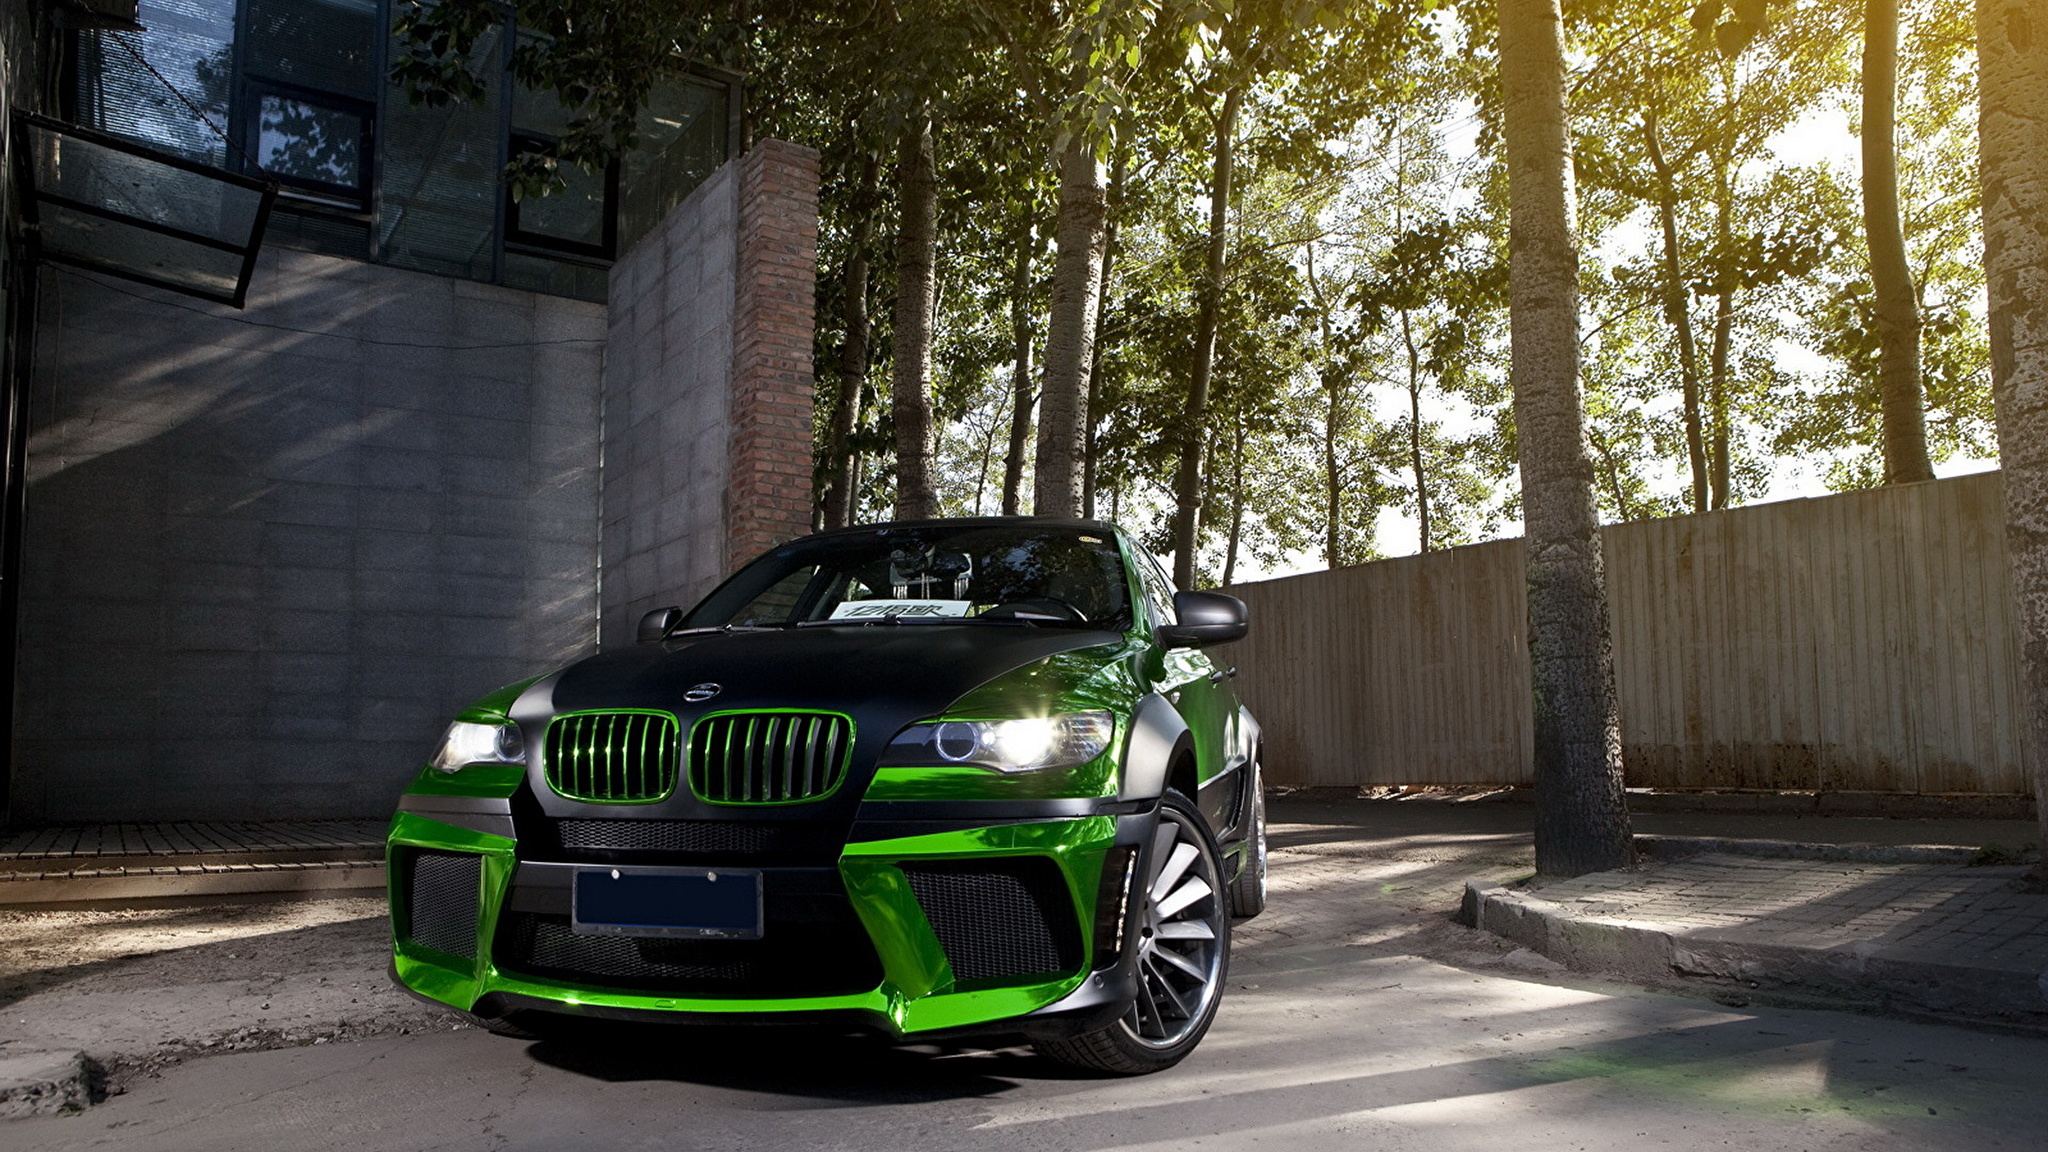 Find x6 ultra. BMW x6m Green. БМВ x6 зеленый. БМВ х7 зеленый. БМВ Икс 7 зеленый.